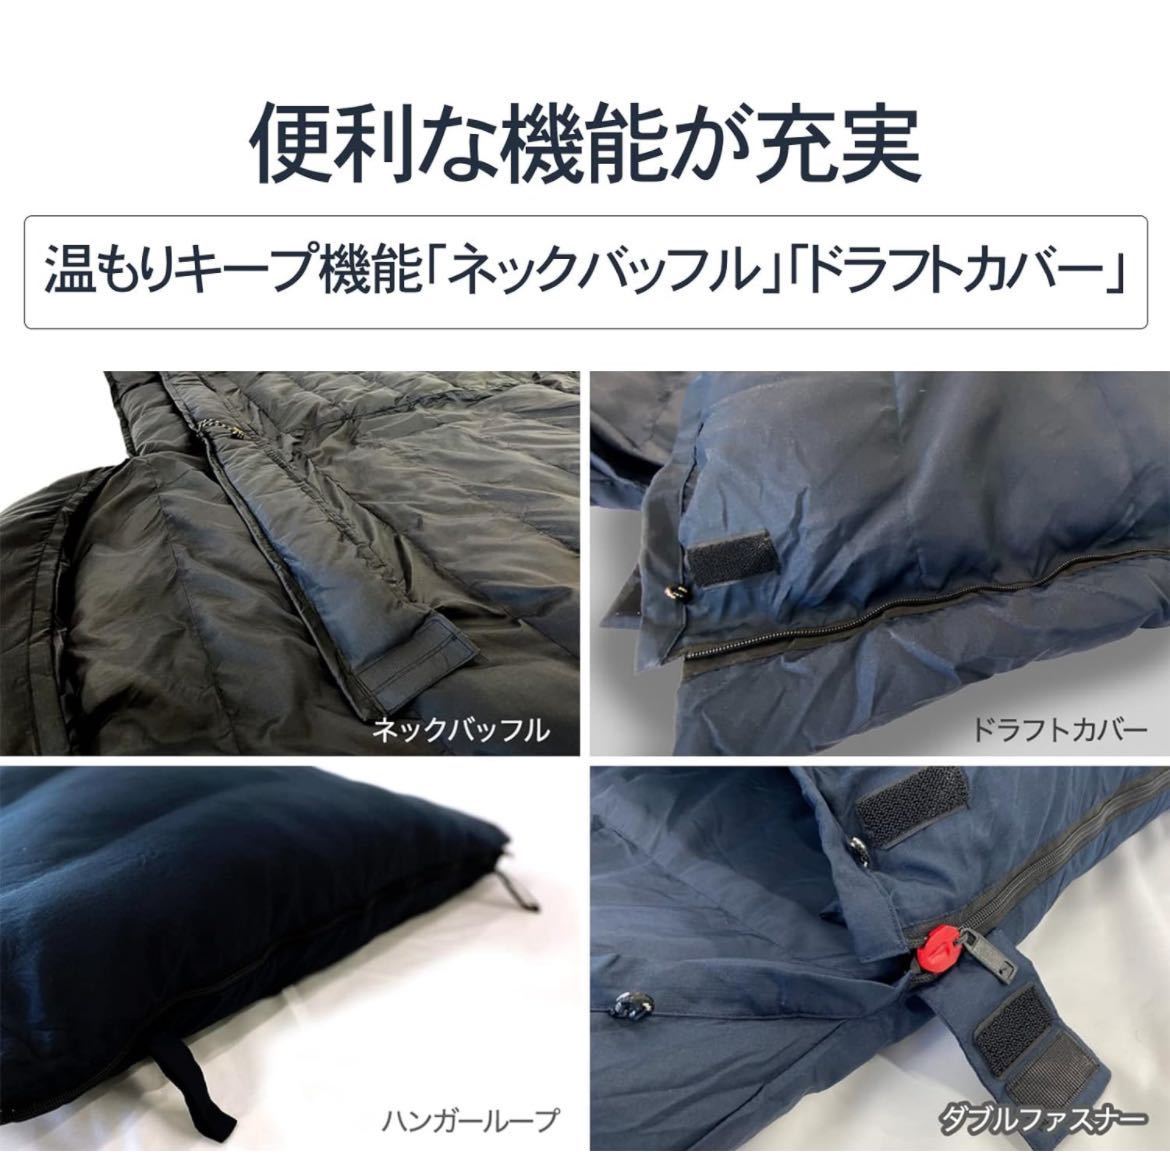  sleeping bag sleeping bag graph .n human work down winter winter strongest envelope type -25*C fieldsahara ZG2500 6